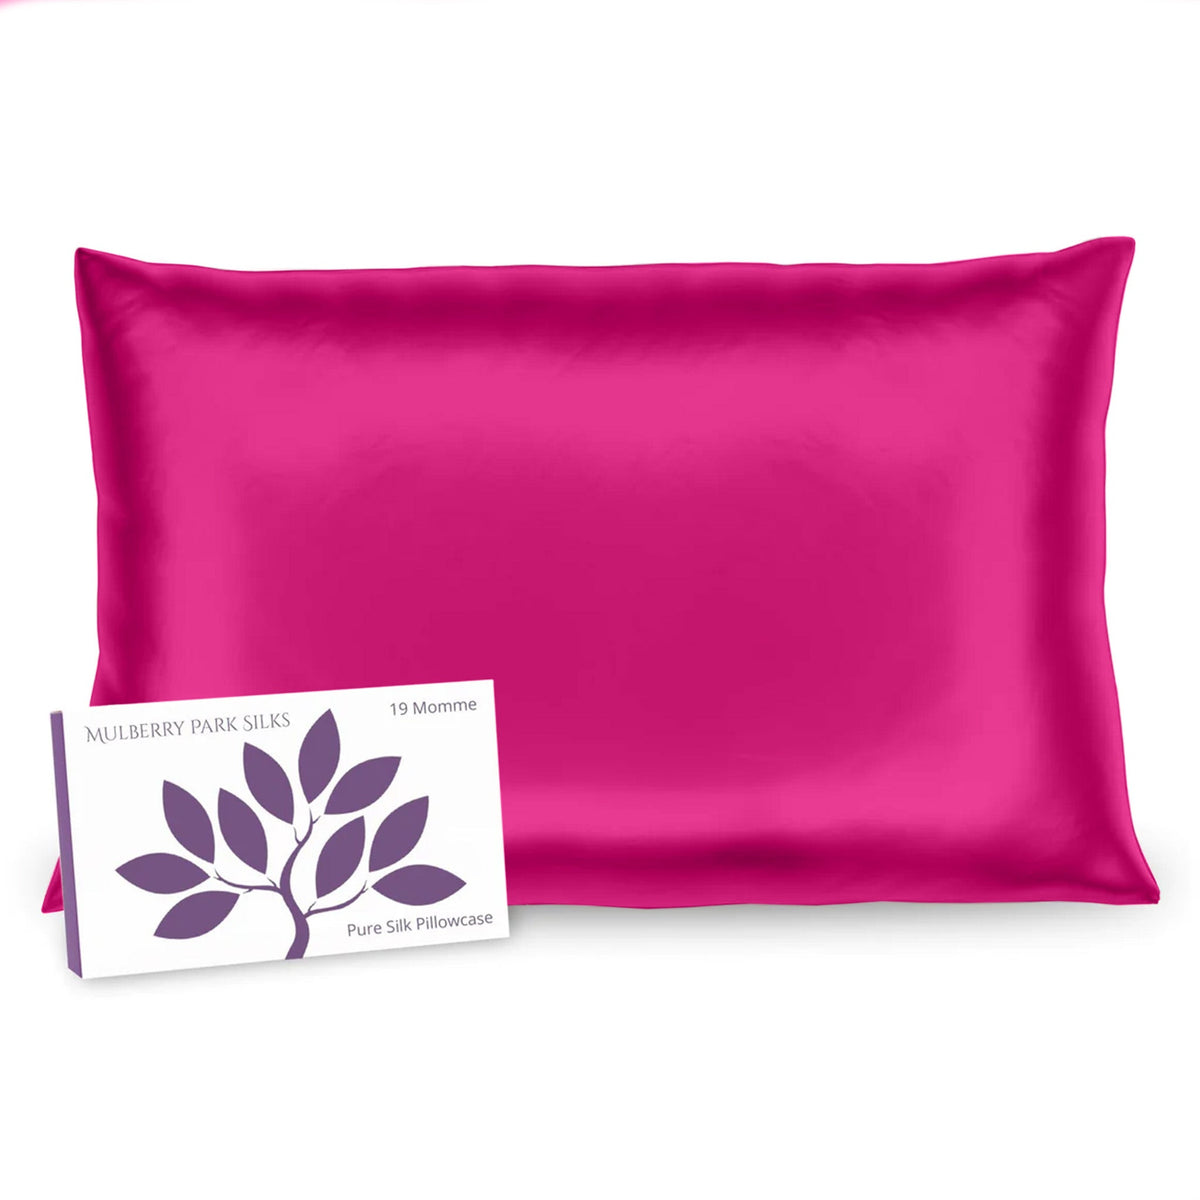 Mulberry Park Silks Luxury 19 Momme Pure Silk Pillowcase - Magenta